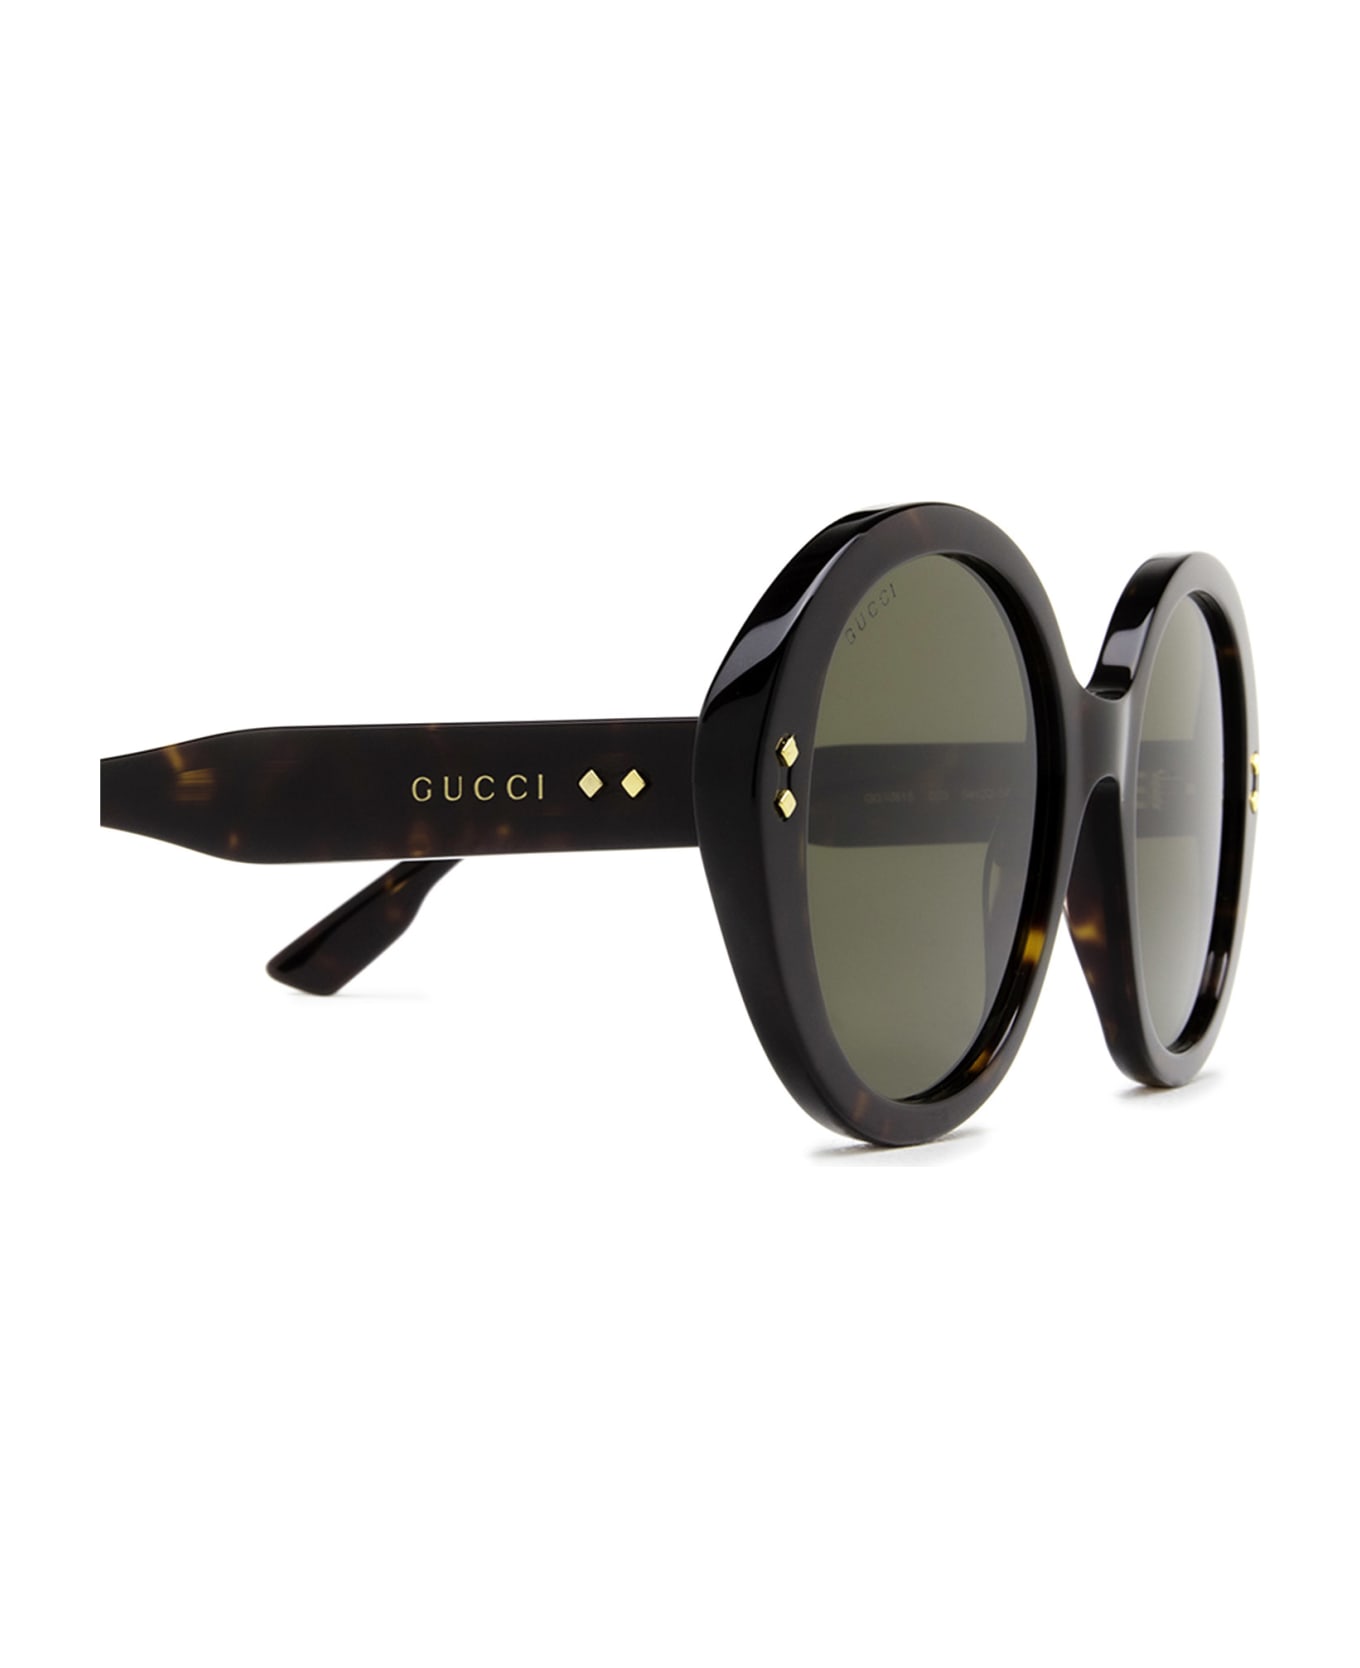 Gucci Eyewear Gg1081s Havana Sunglasses - Havana